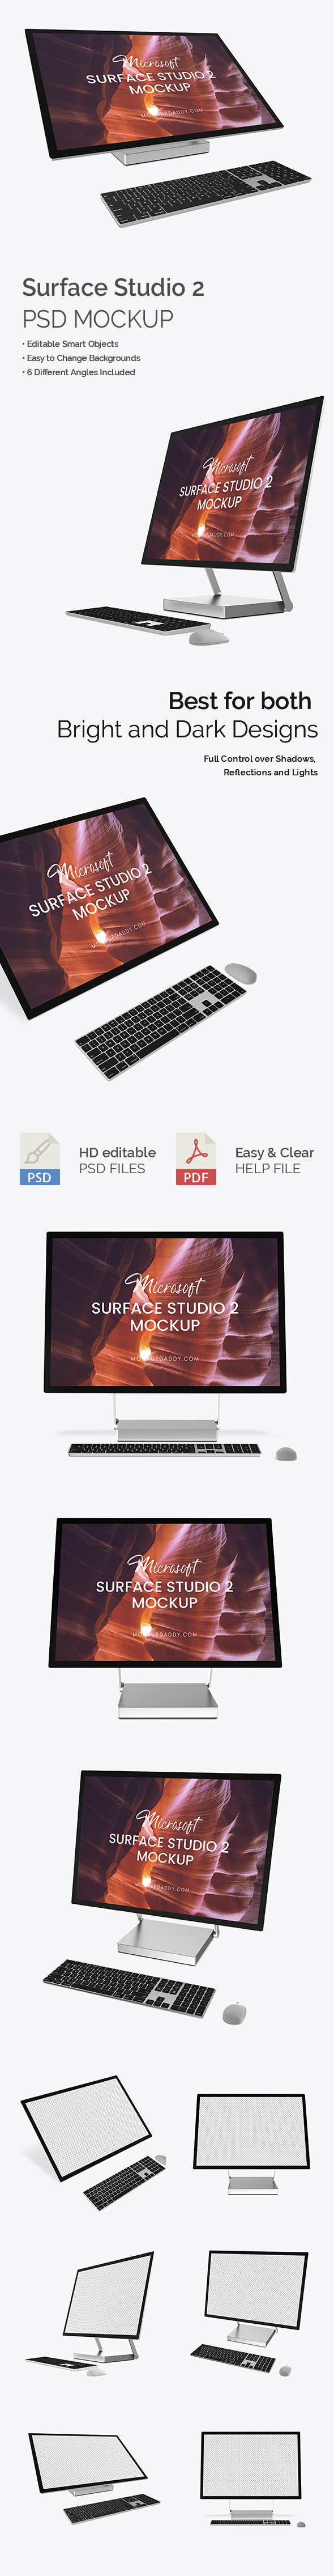 Microsoft Surface Studio 2 Mockup